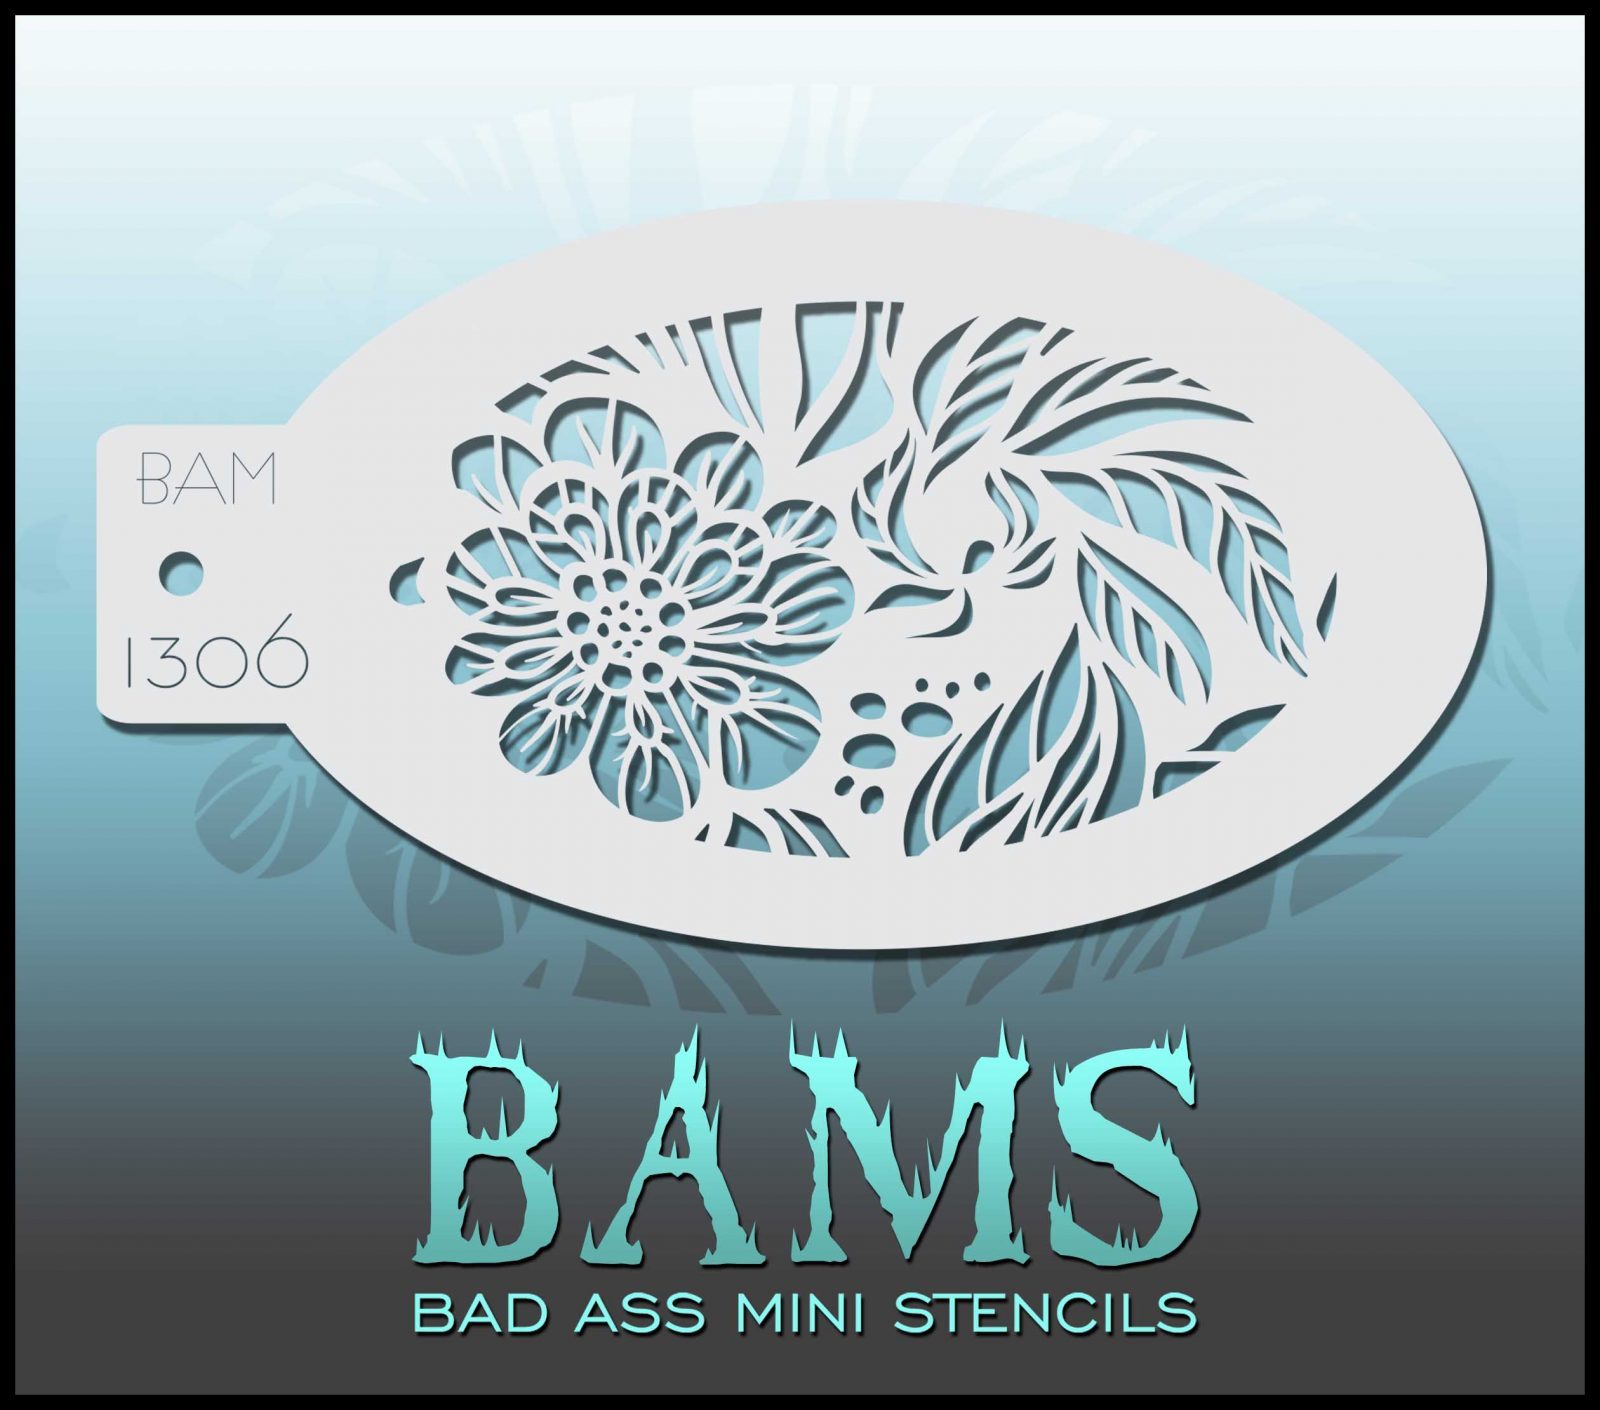 Bad Ass Stencils - BAM 1306 - Stencil Floral